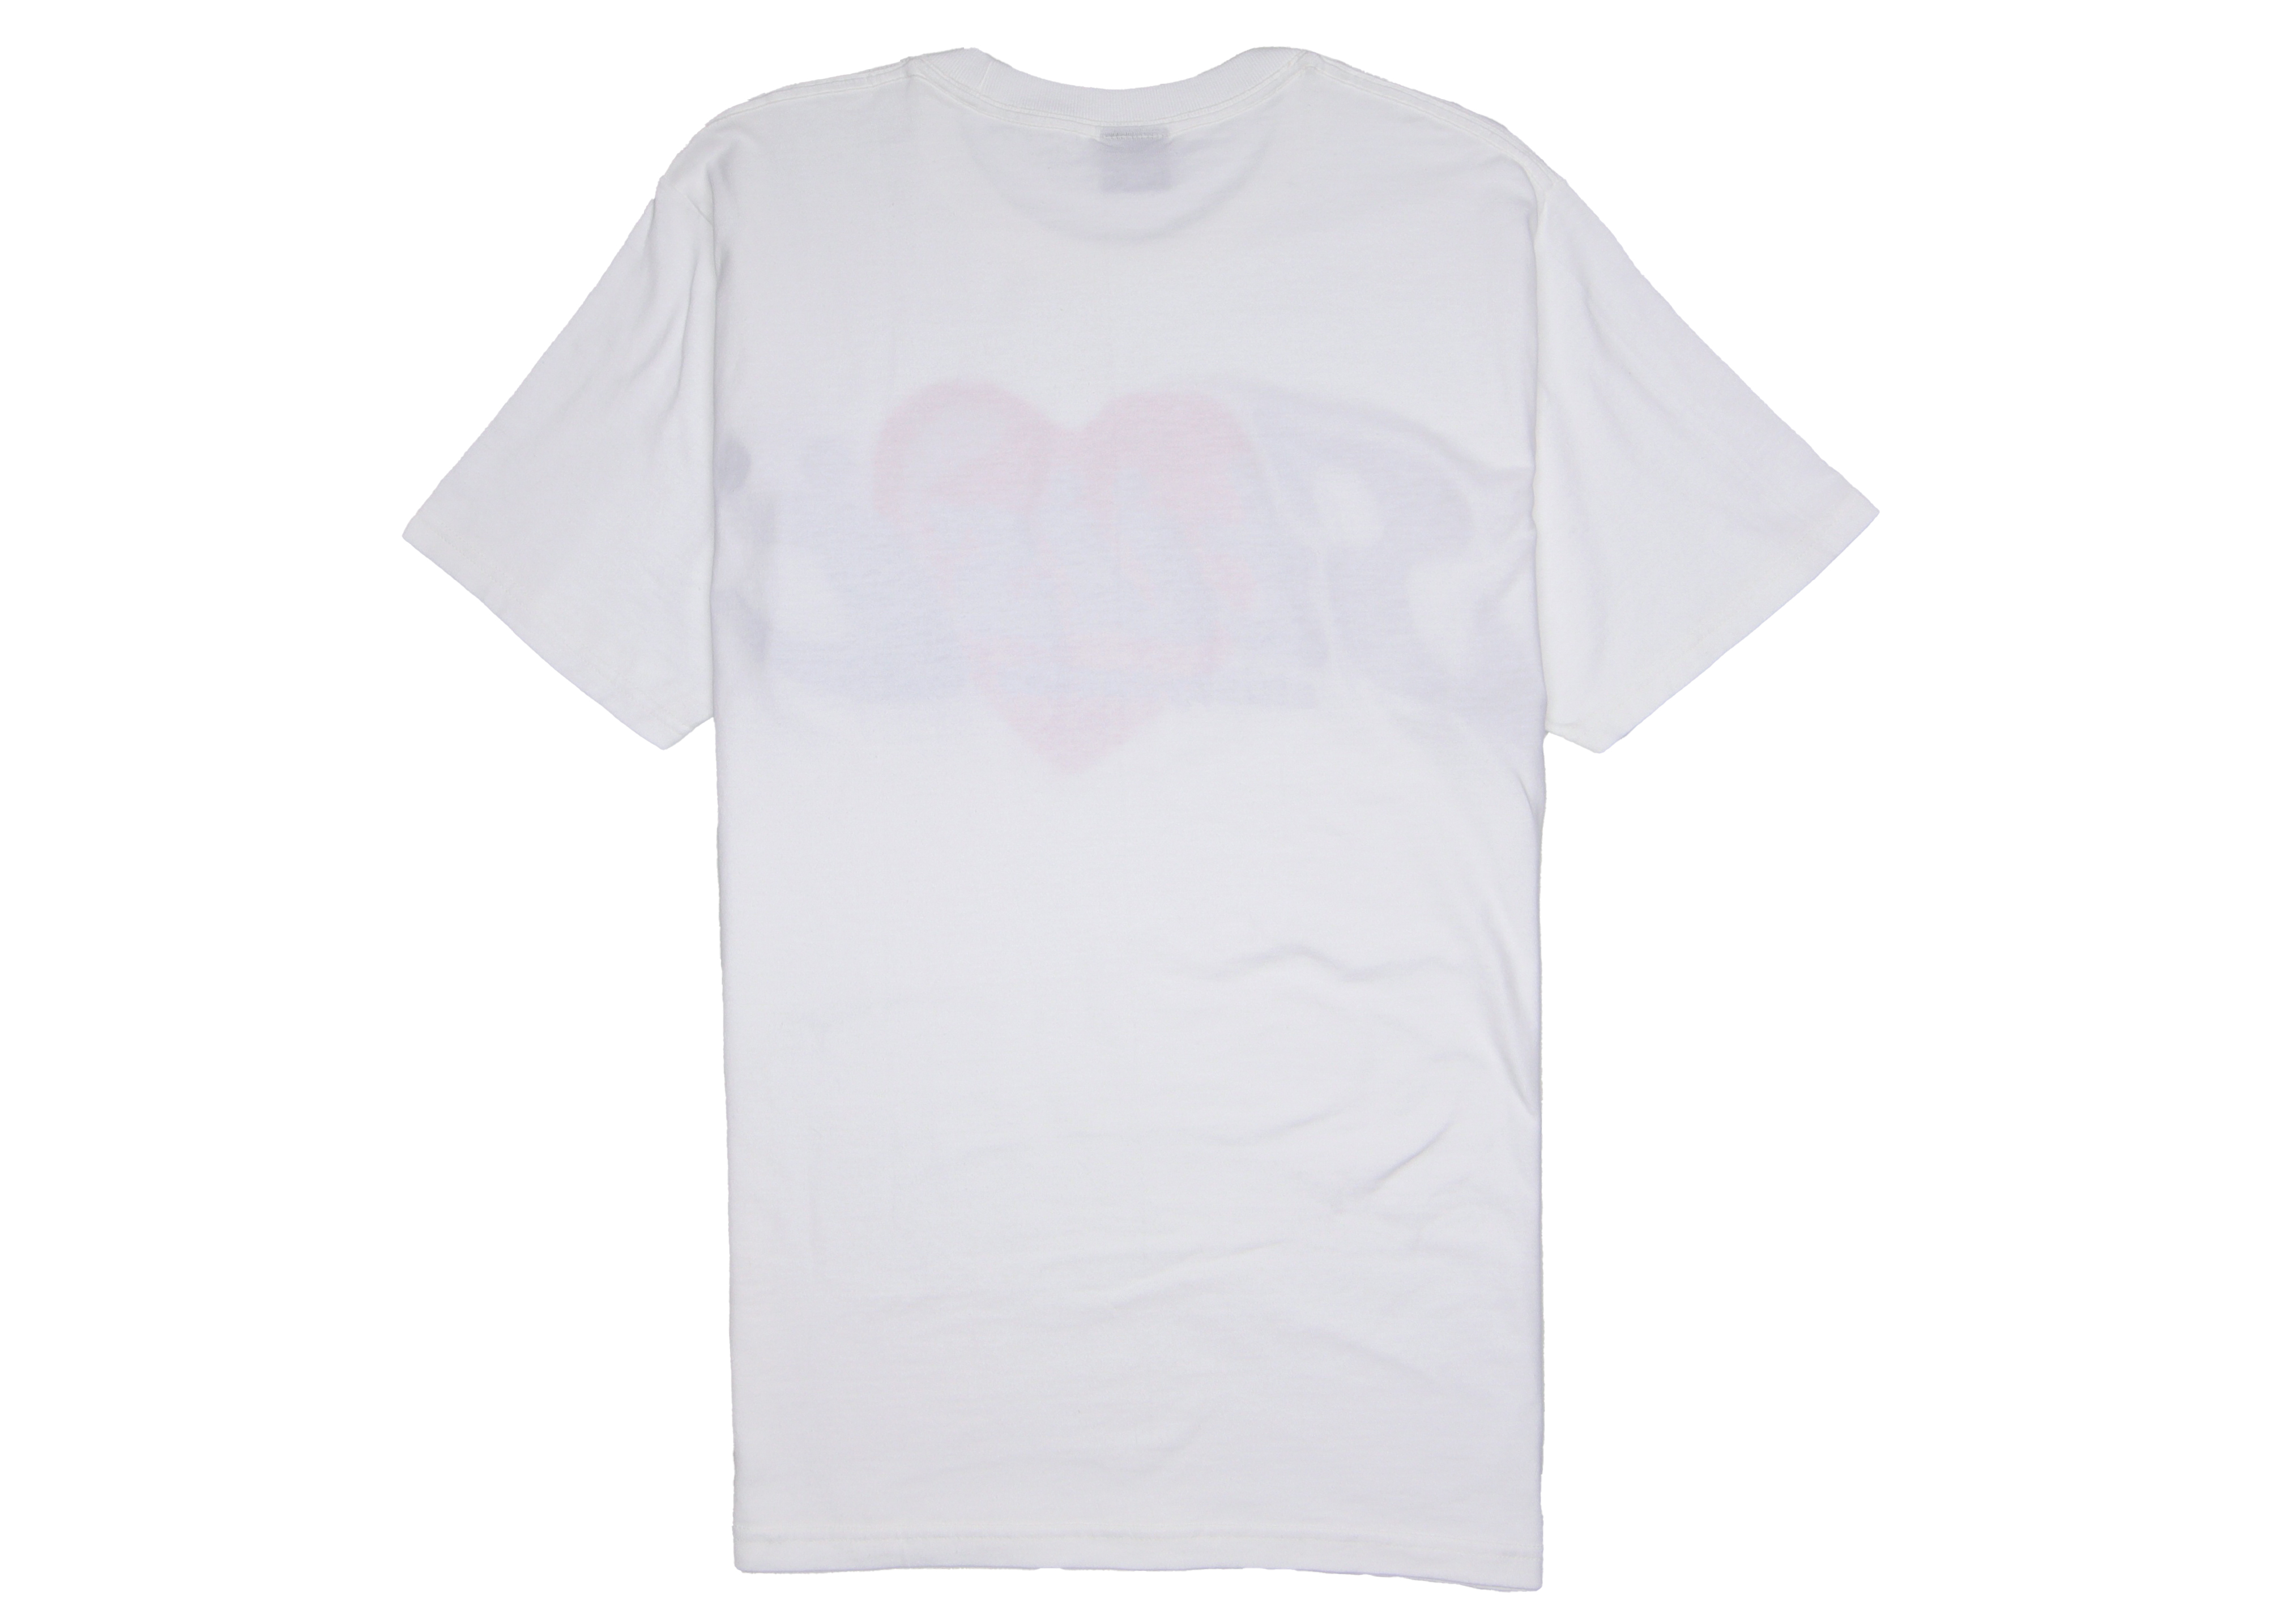 Stussy x CPFM Heart T-shirt White Men's - SS21 - US